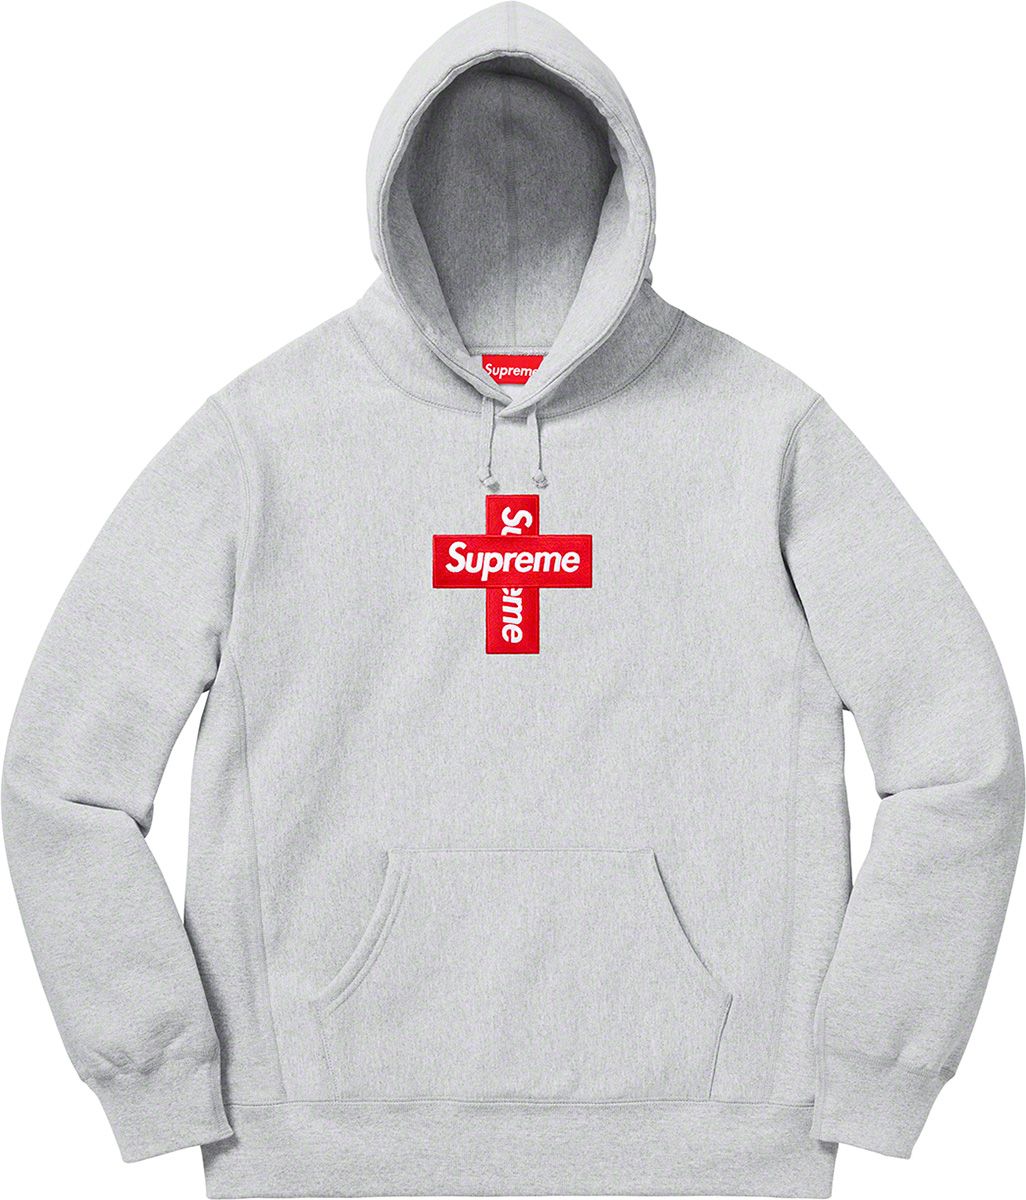 Supreme Cross Box Logo Hooded Sweatshirt 爆買い新作 - トップス